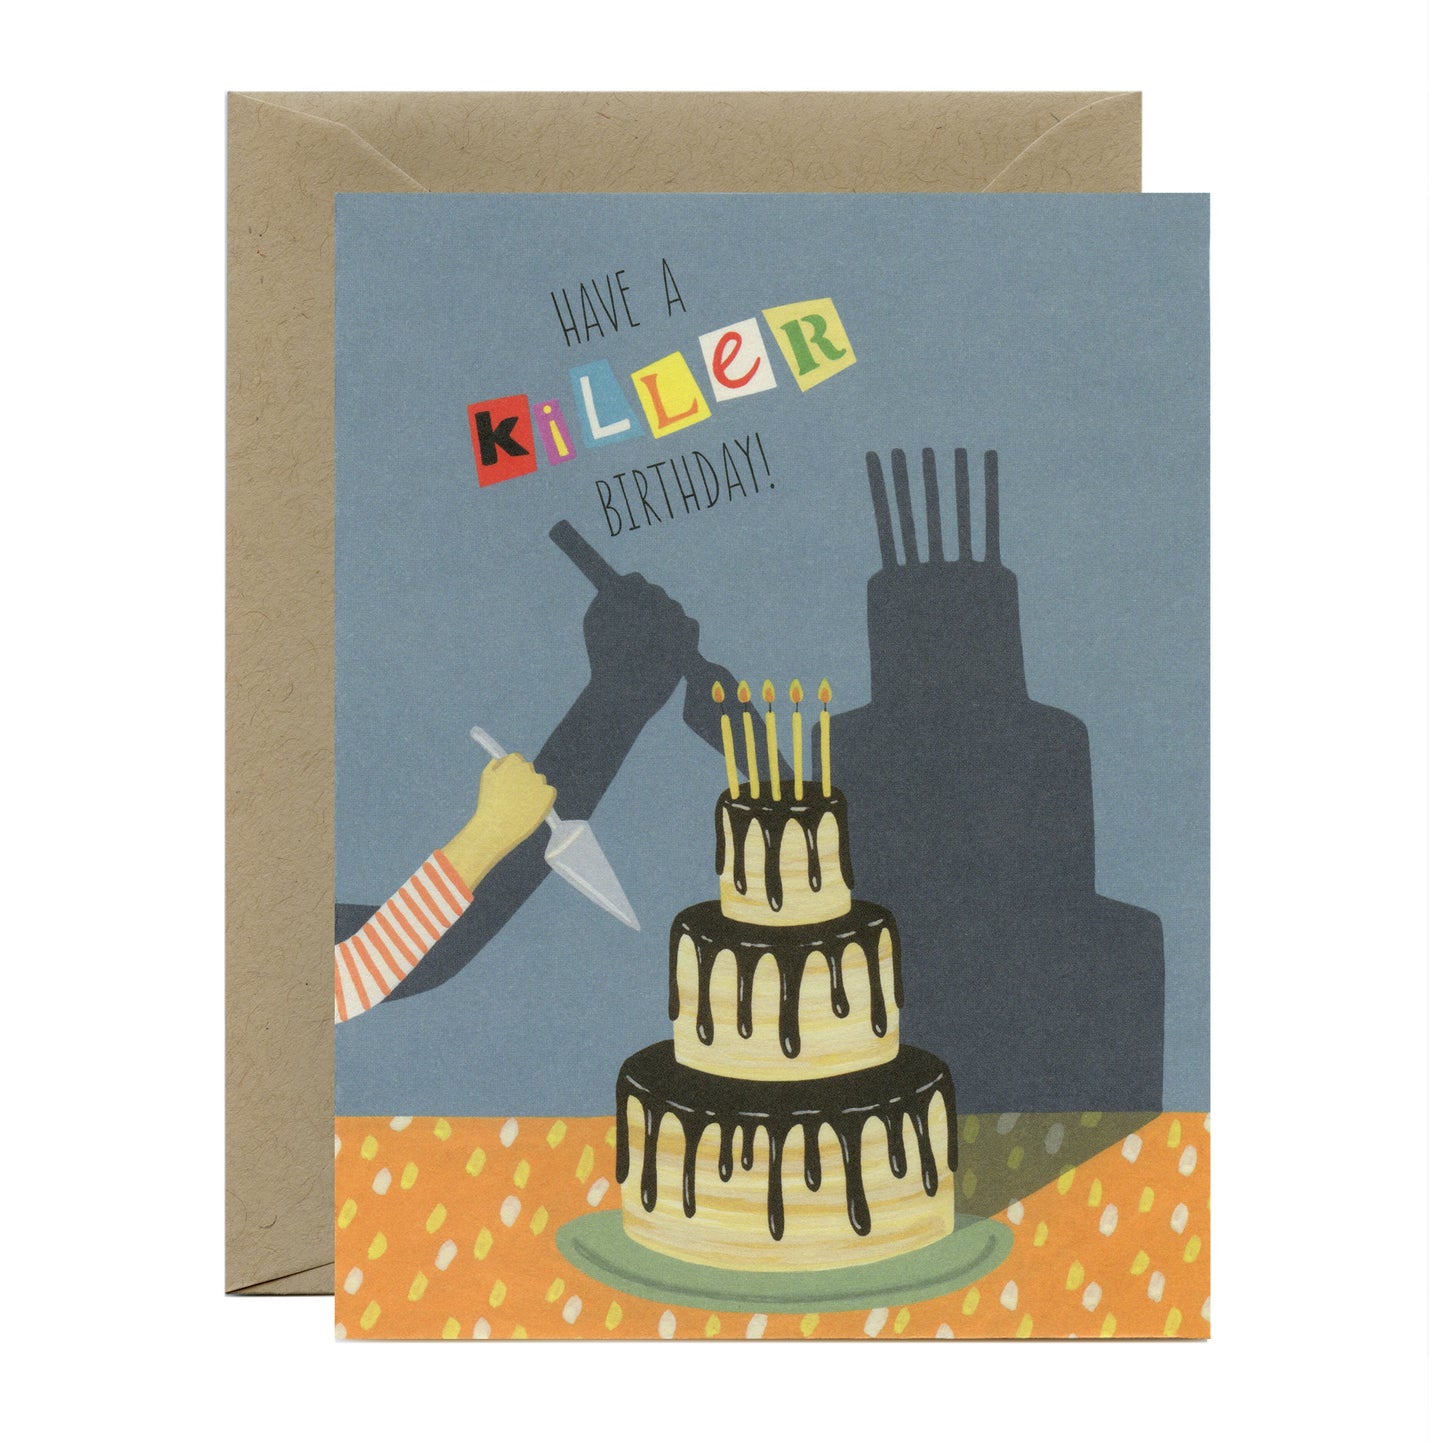 TRUE CRIME KILLER CAKE - BIRTHDAY GREETING CARD